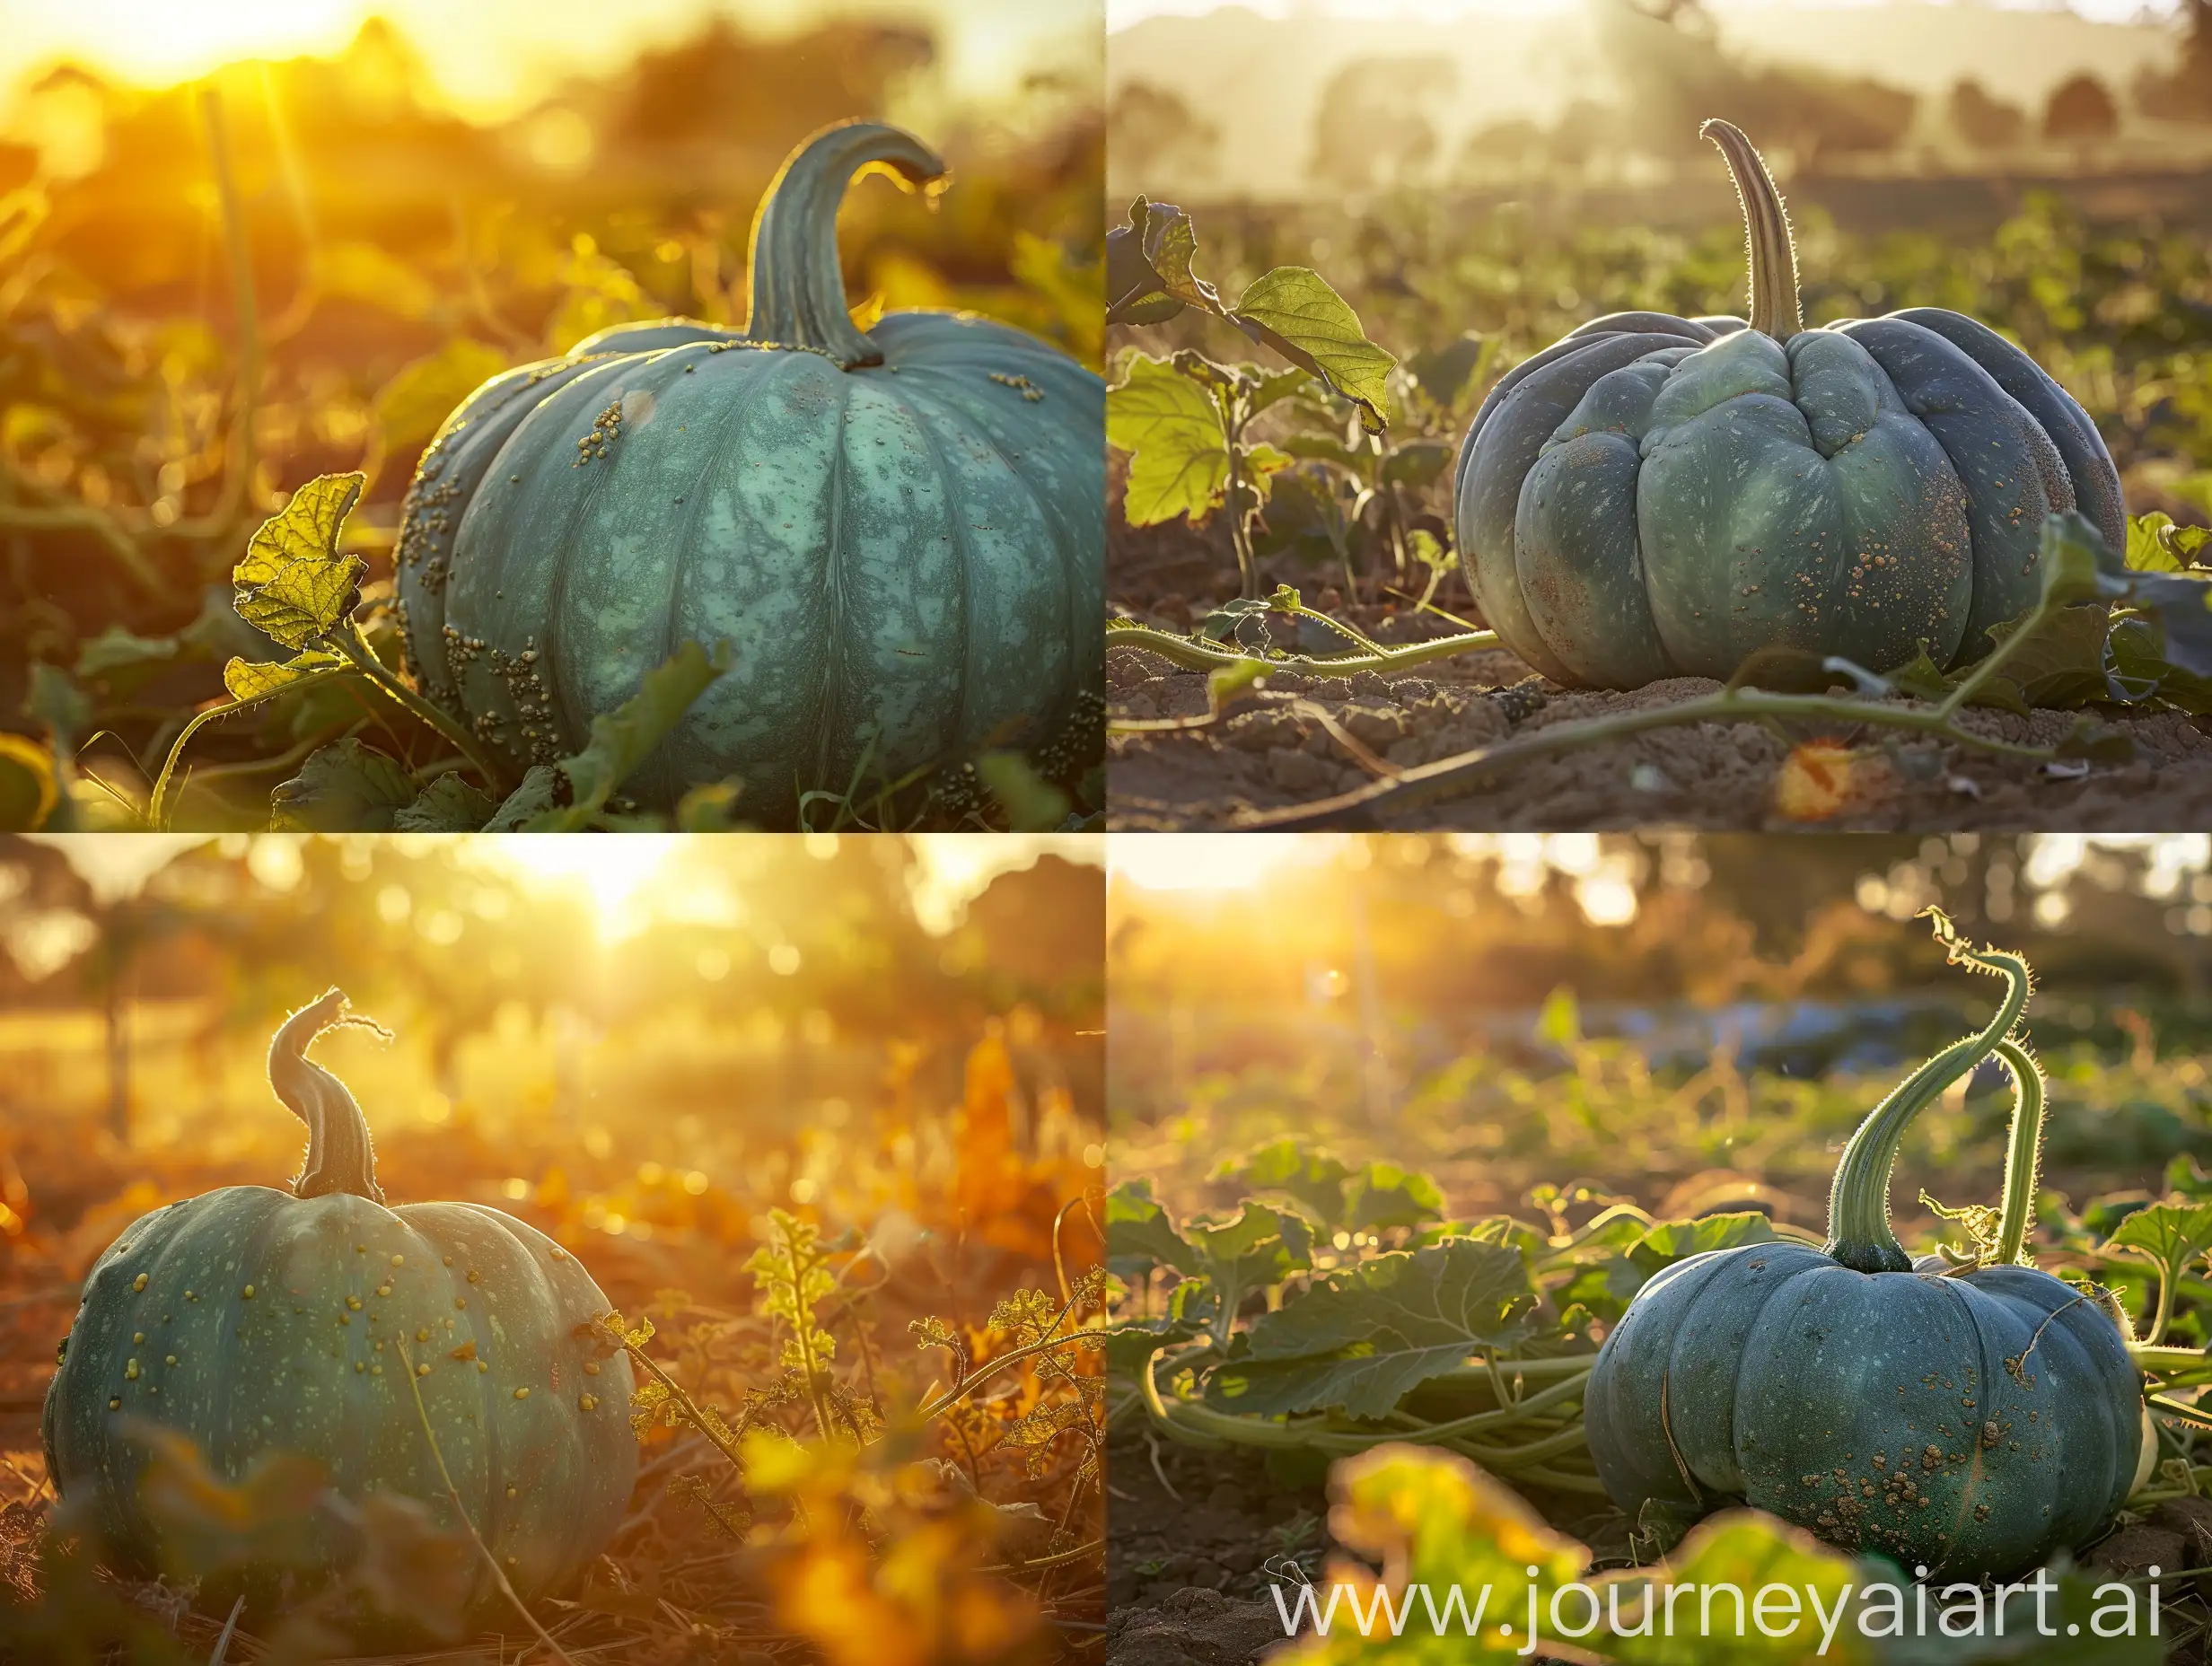 Golden-Glow-Pumpkin-Serene-Ambiance-with-Jarrahdale-Heirloom-Pumpkin